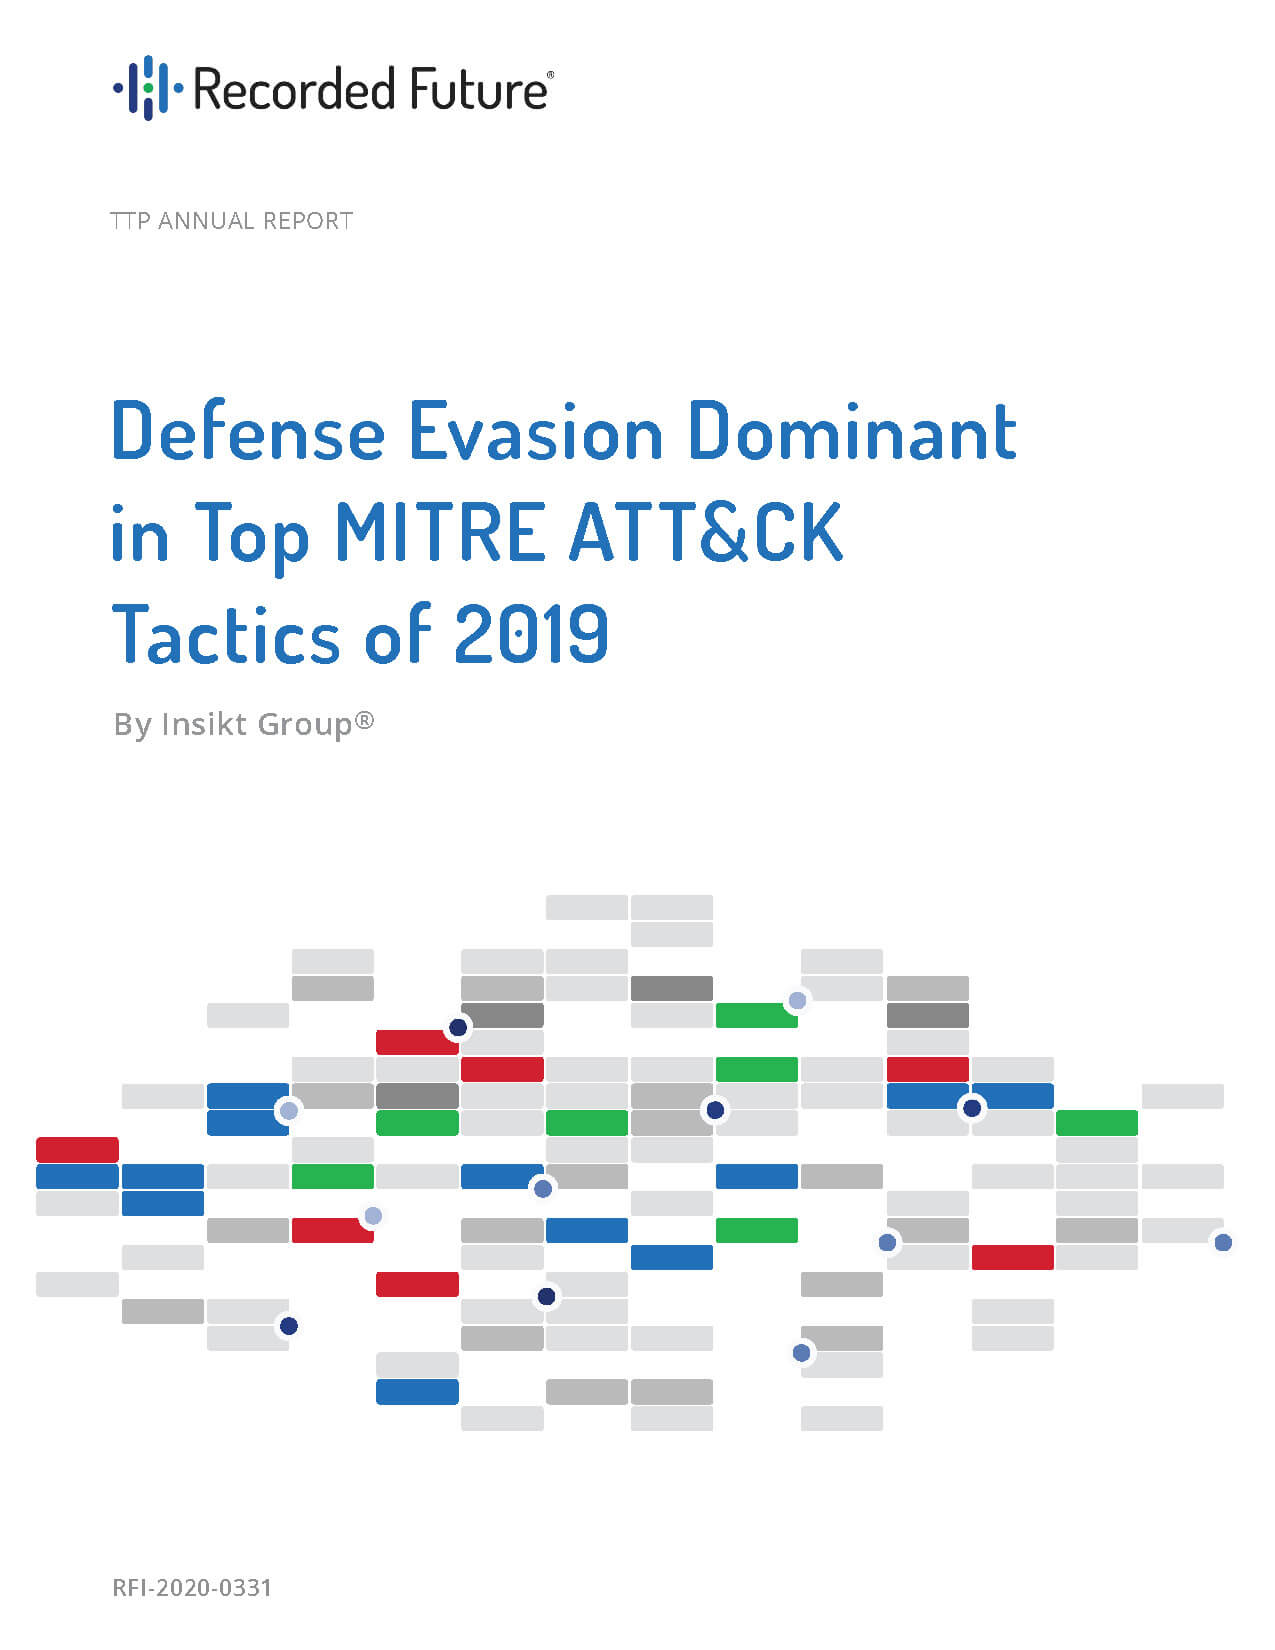 Defense Evasion Dominant in Top MITRE ATT&CK Tactics of 2019 Report